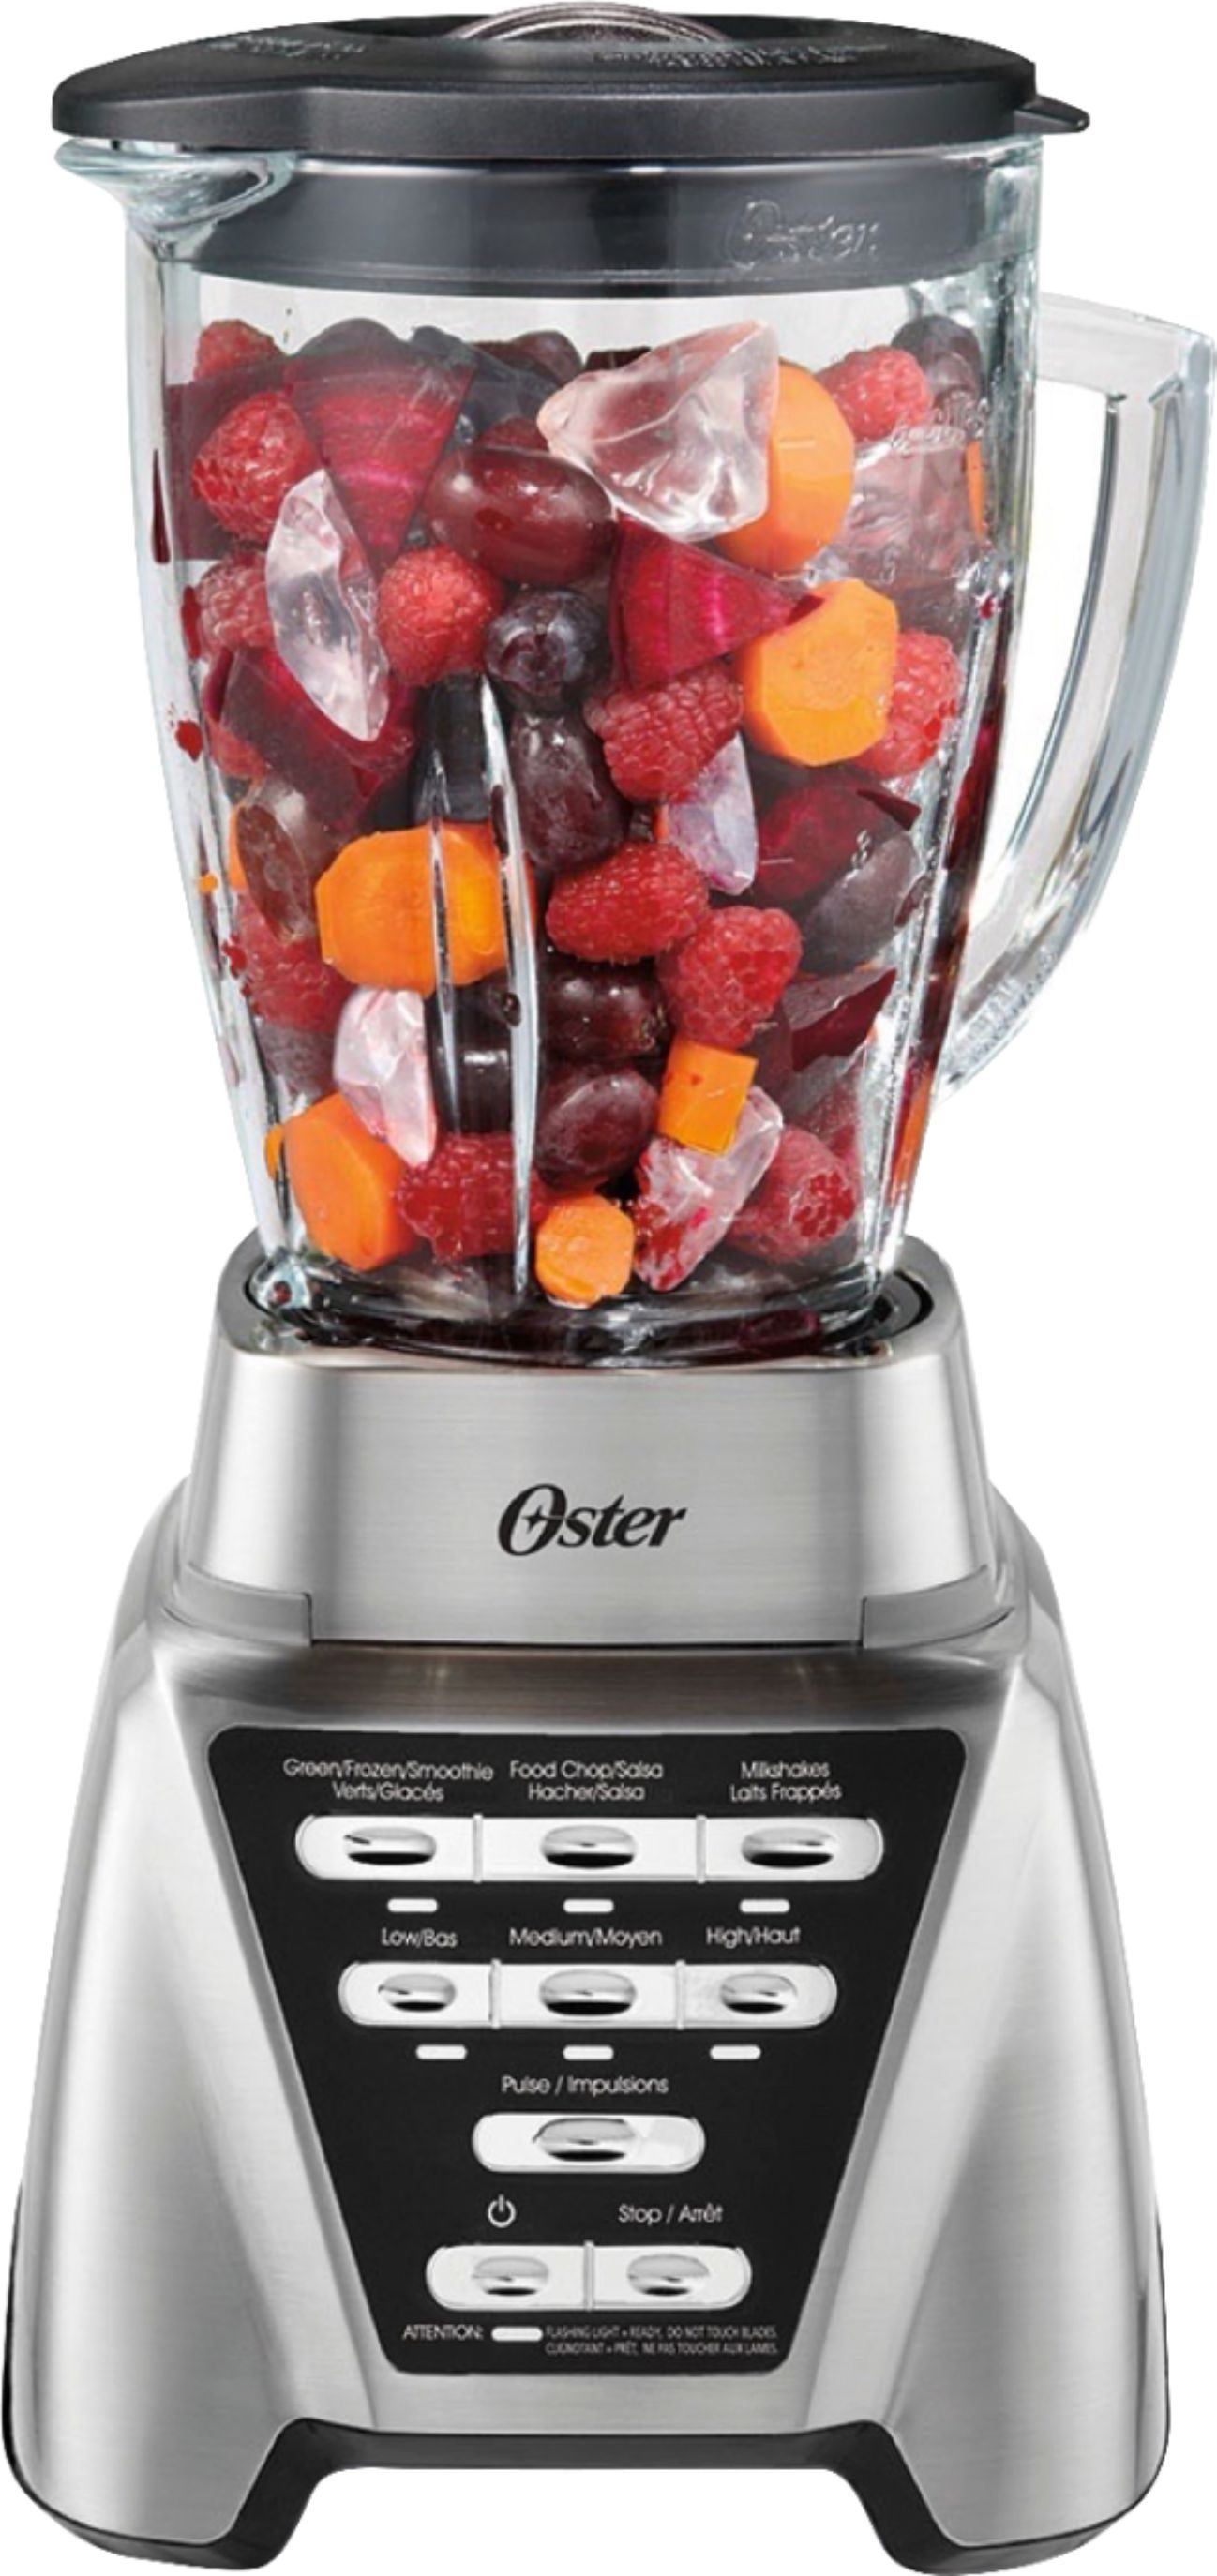 I Love it: Oster Pro 1200 Blender Food Processor Review